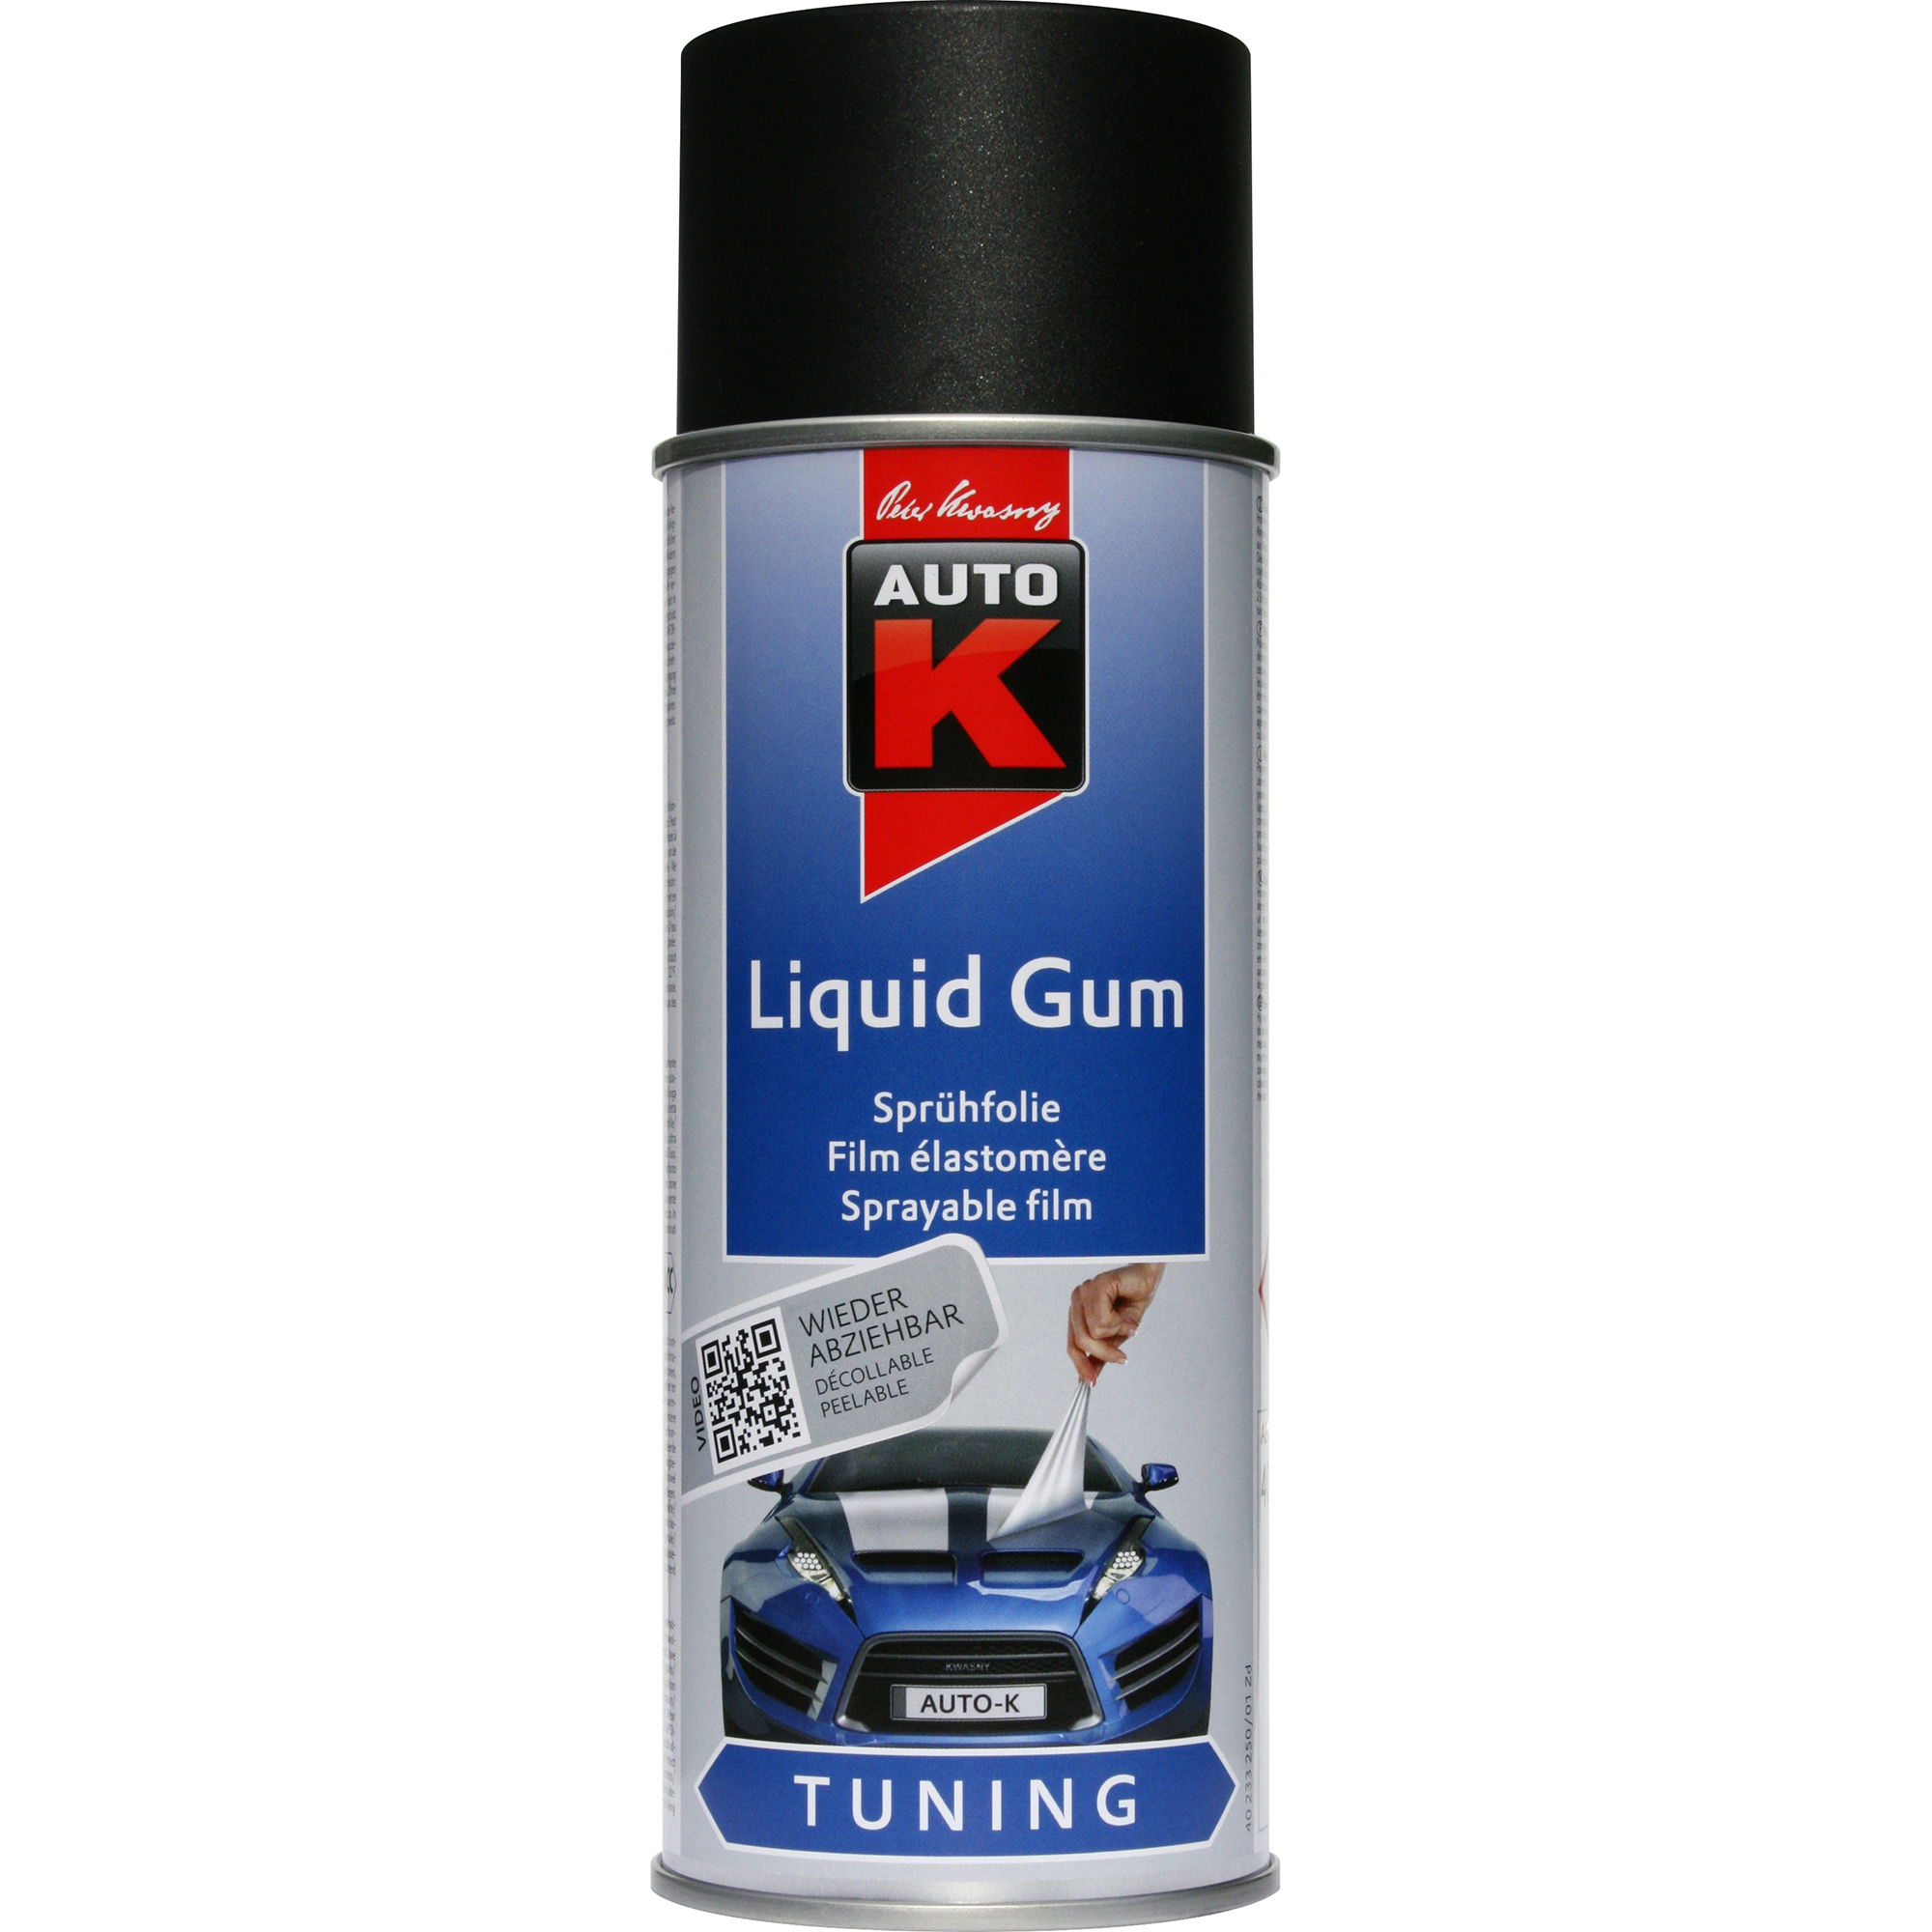 Sprühfolie Liquid Gum 'Auto-K' schwarz 400 ml + product picture